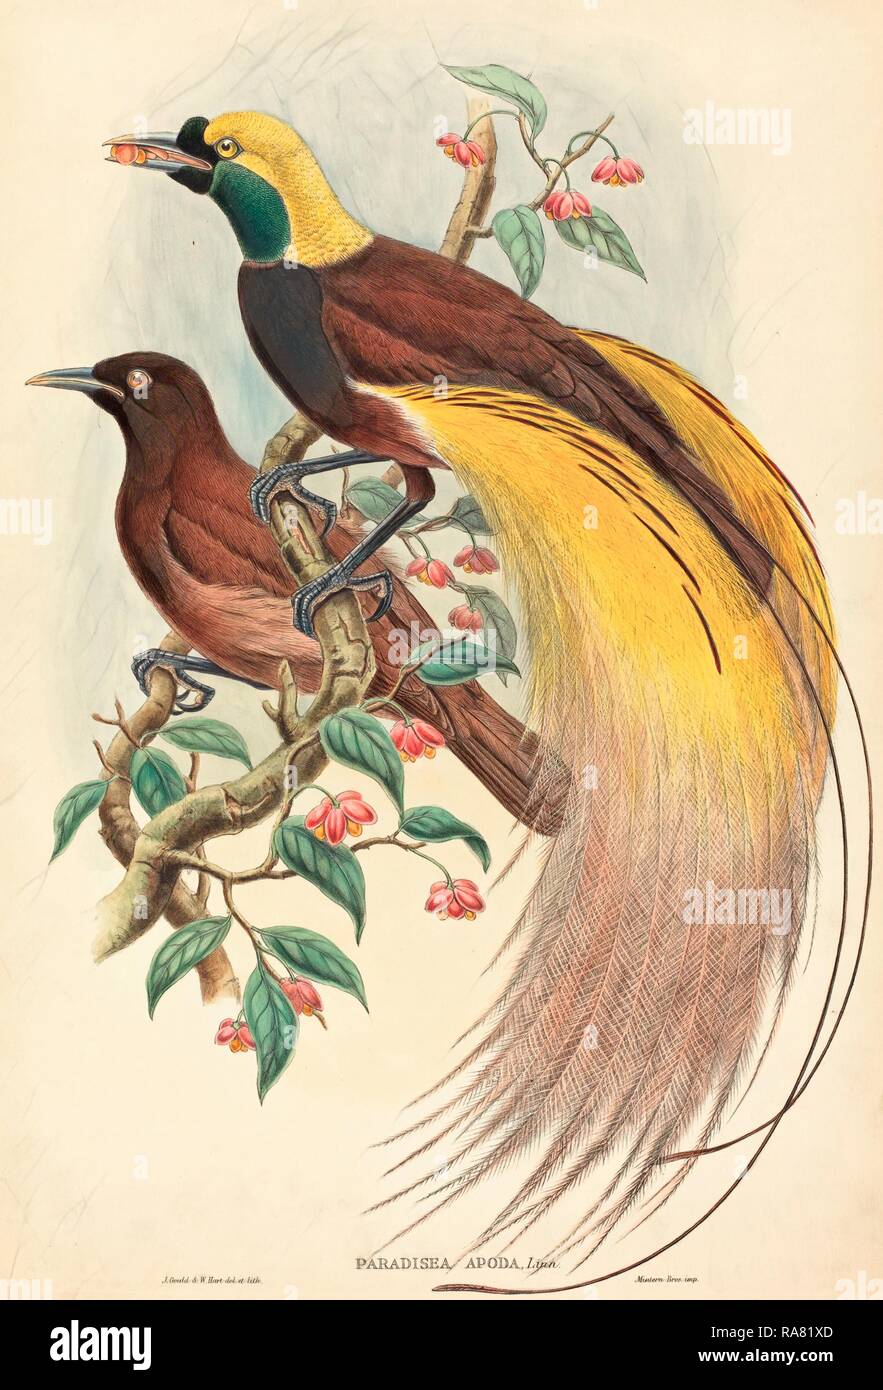 John Gould and W. Hart (British, 1804 - 1881 ), Bird of Paradise (Paradisea apoda), published 1875 1888, hand colored reimagined Stock Photo